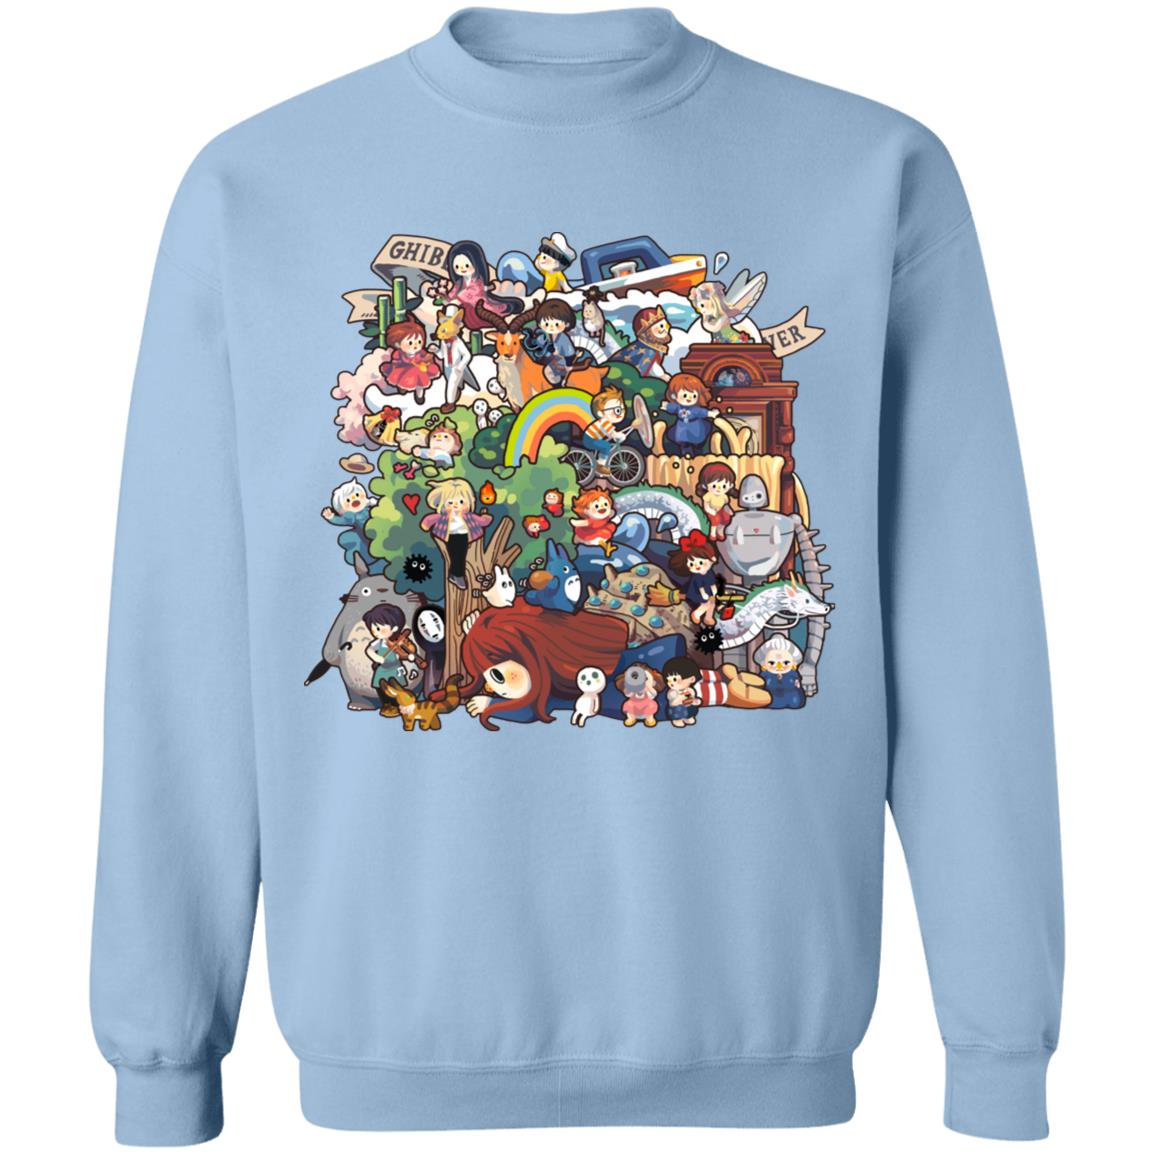 Ghibli Studio All Characters Sweatshirt